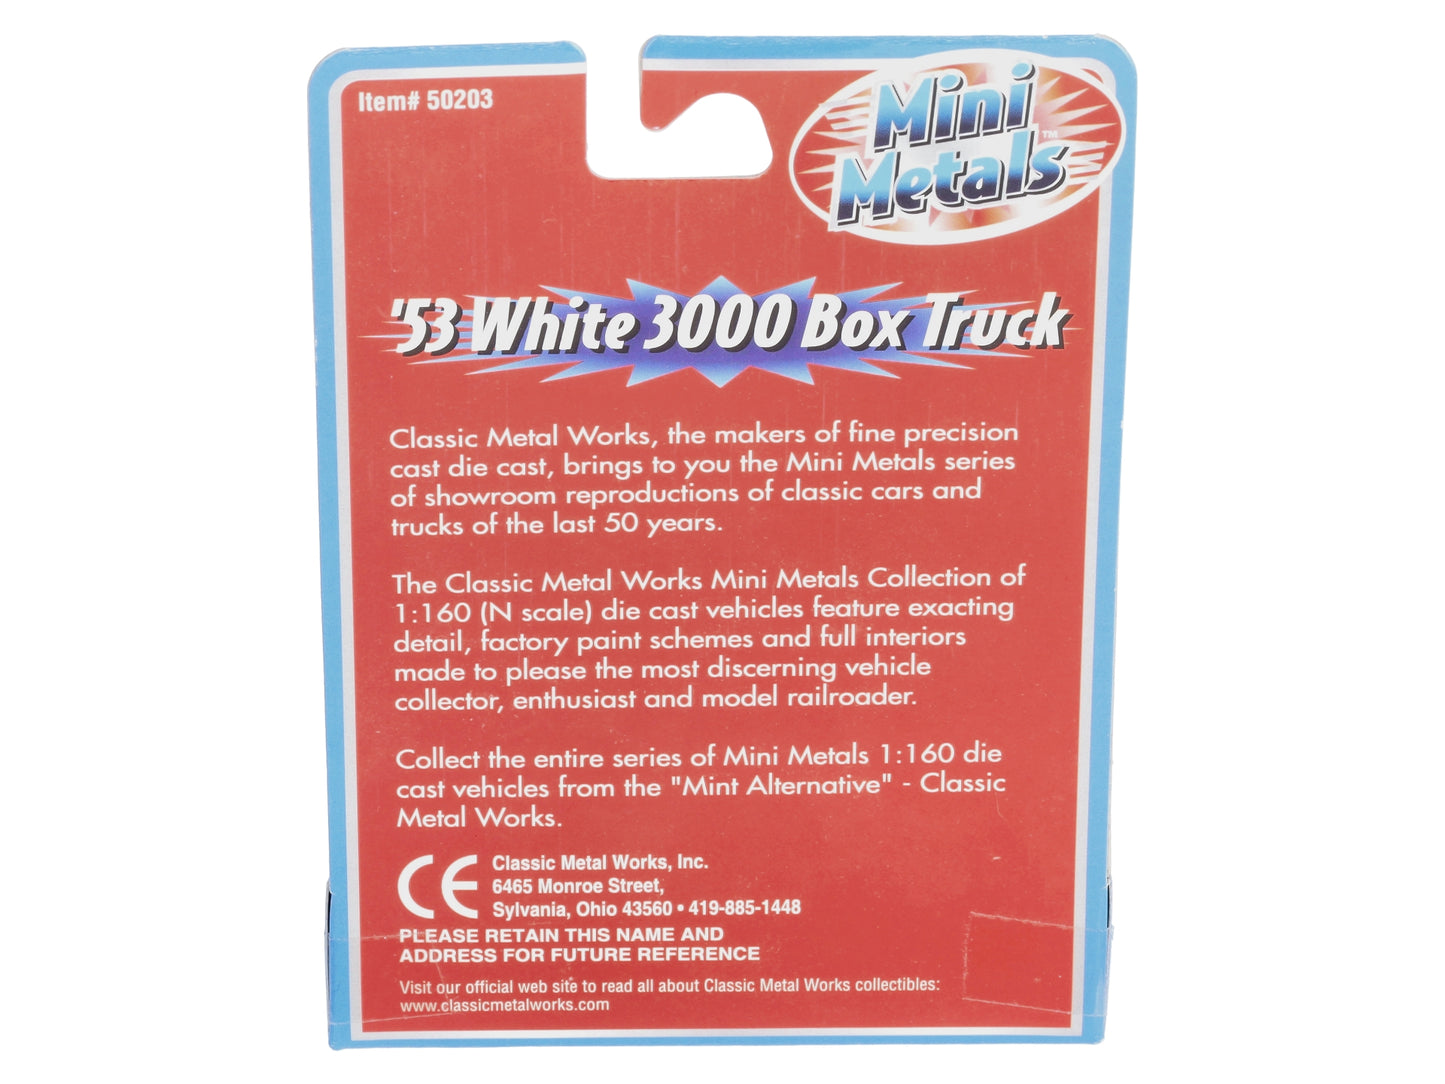 Classic Metal Works 50203 N Mini Metals 1953 White 3000 Box Truck (Pack of 2)